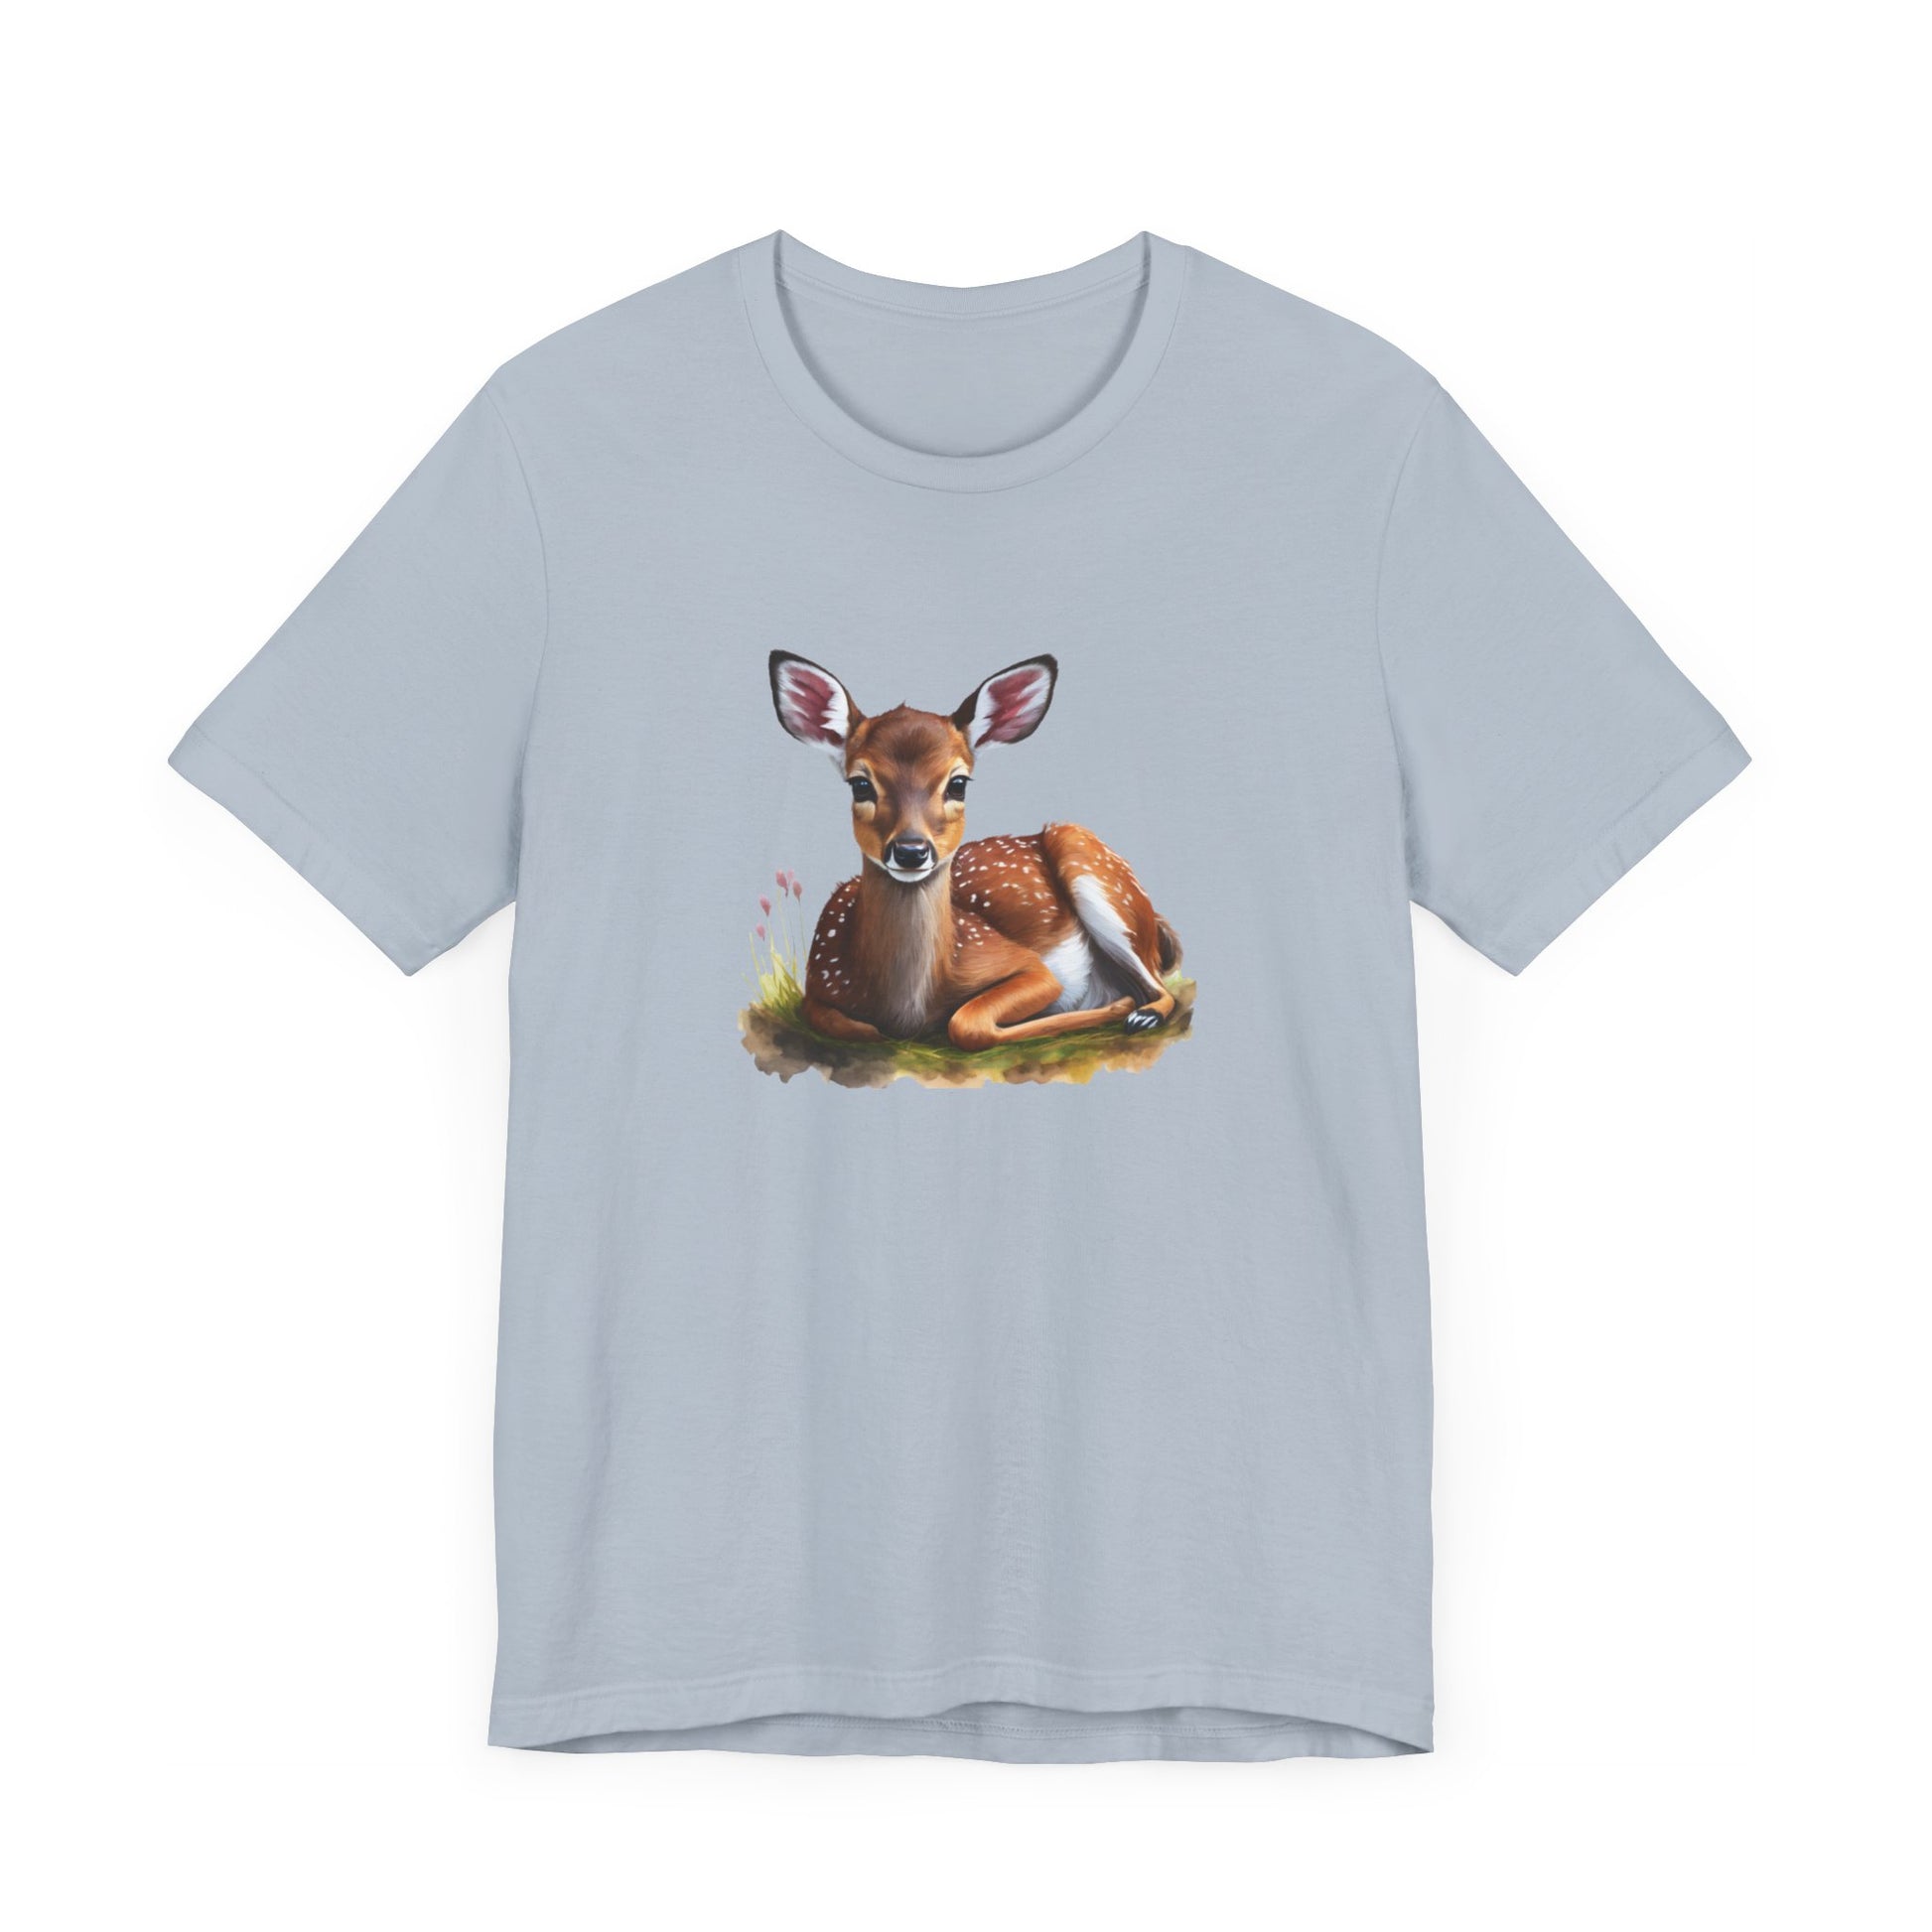 Deer Kind-Hearted Graphic T-shirt - Tortuna